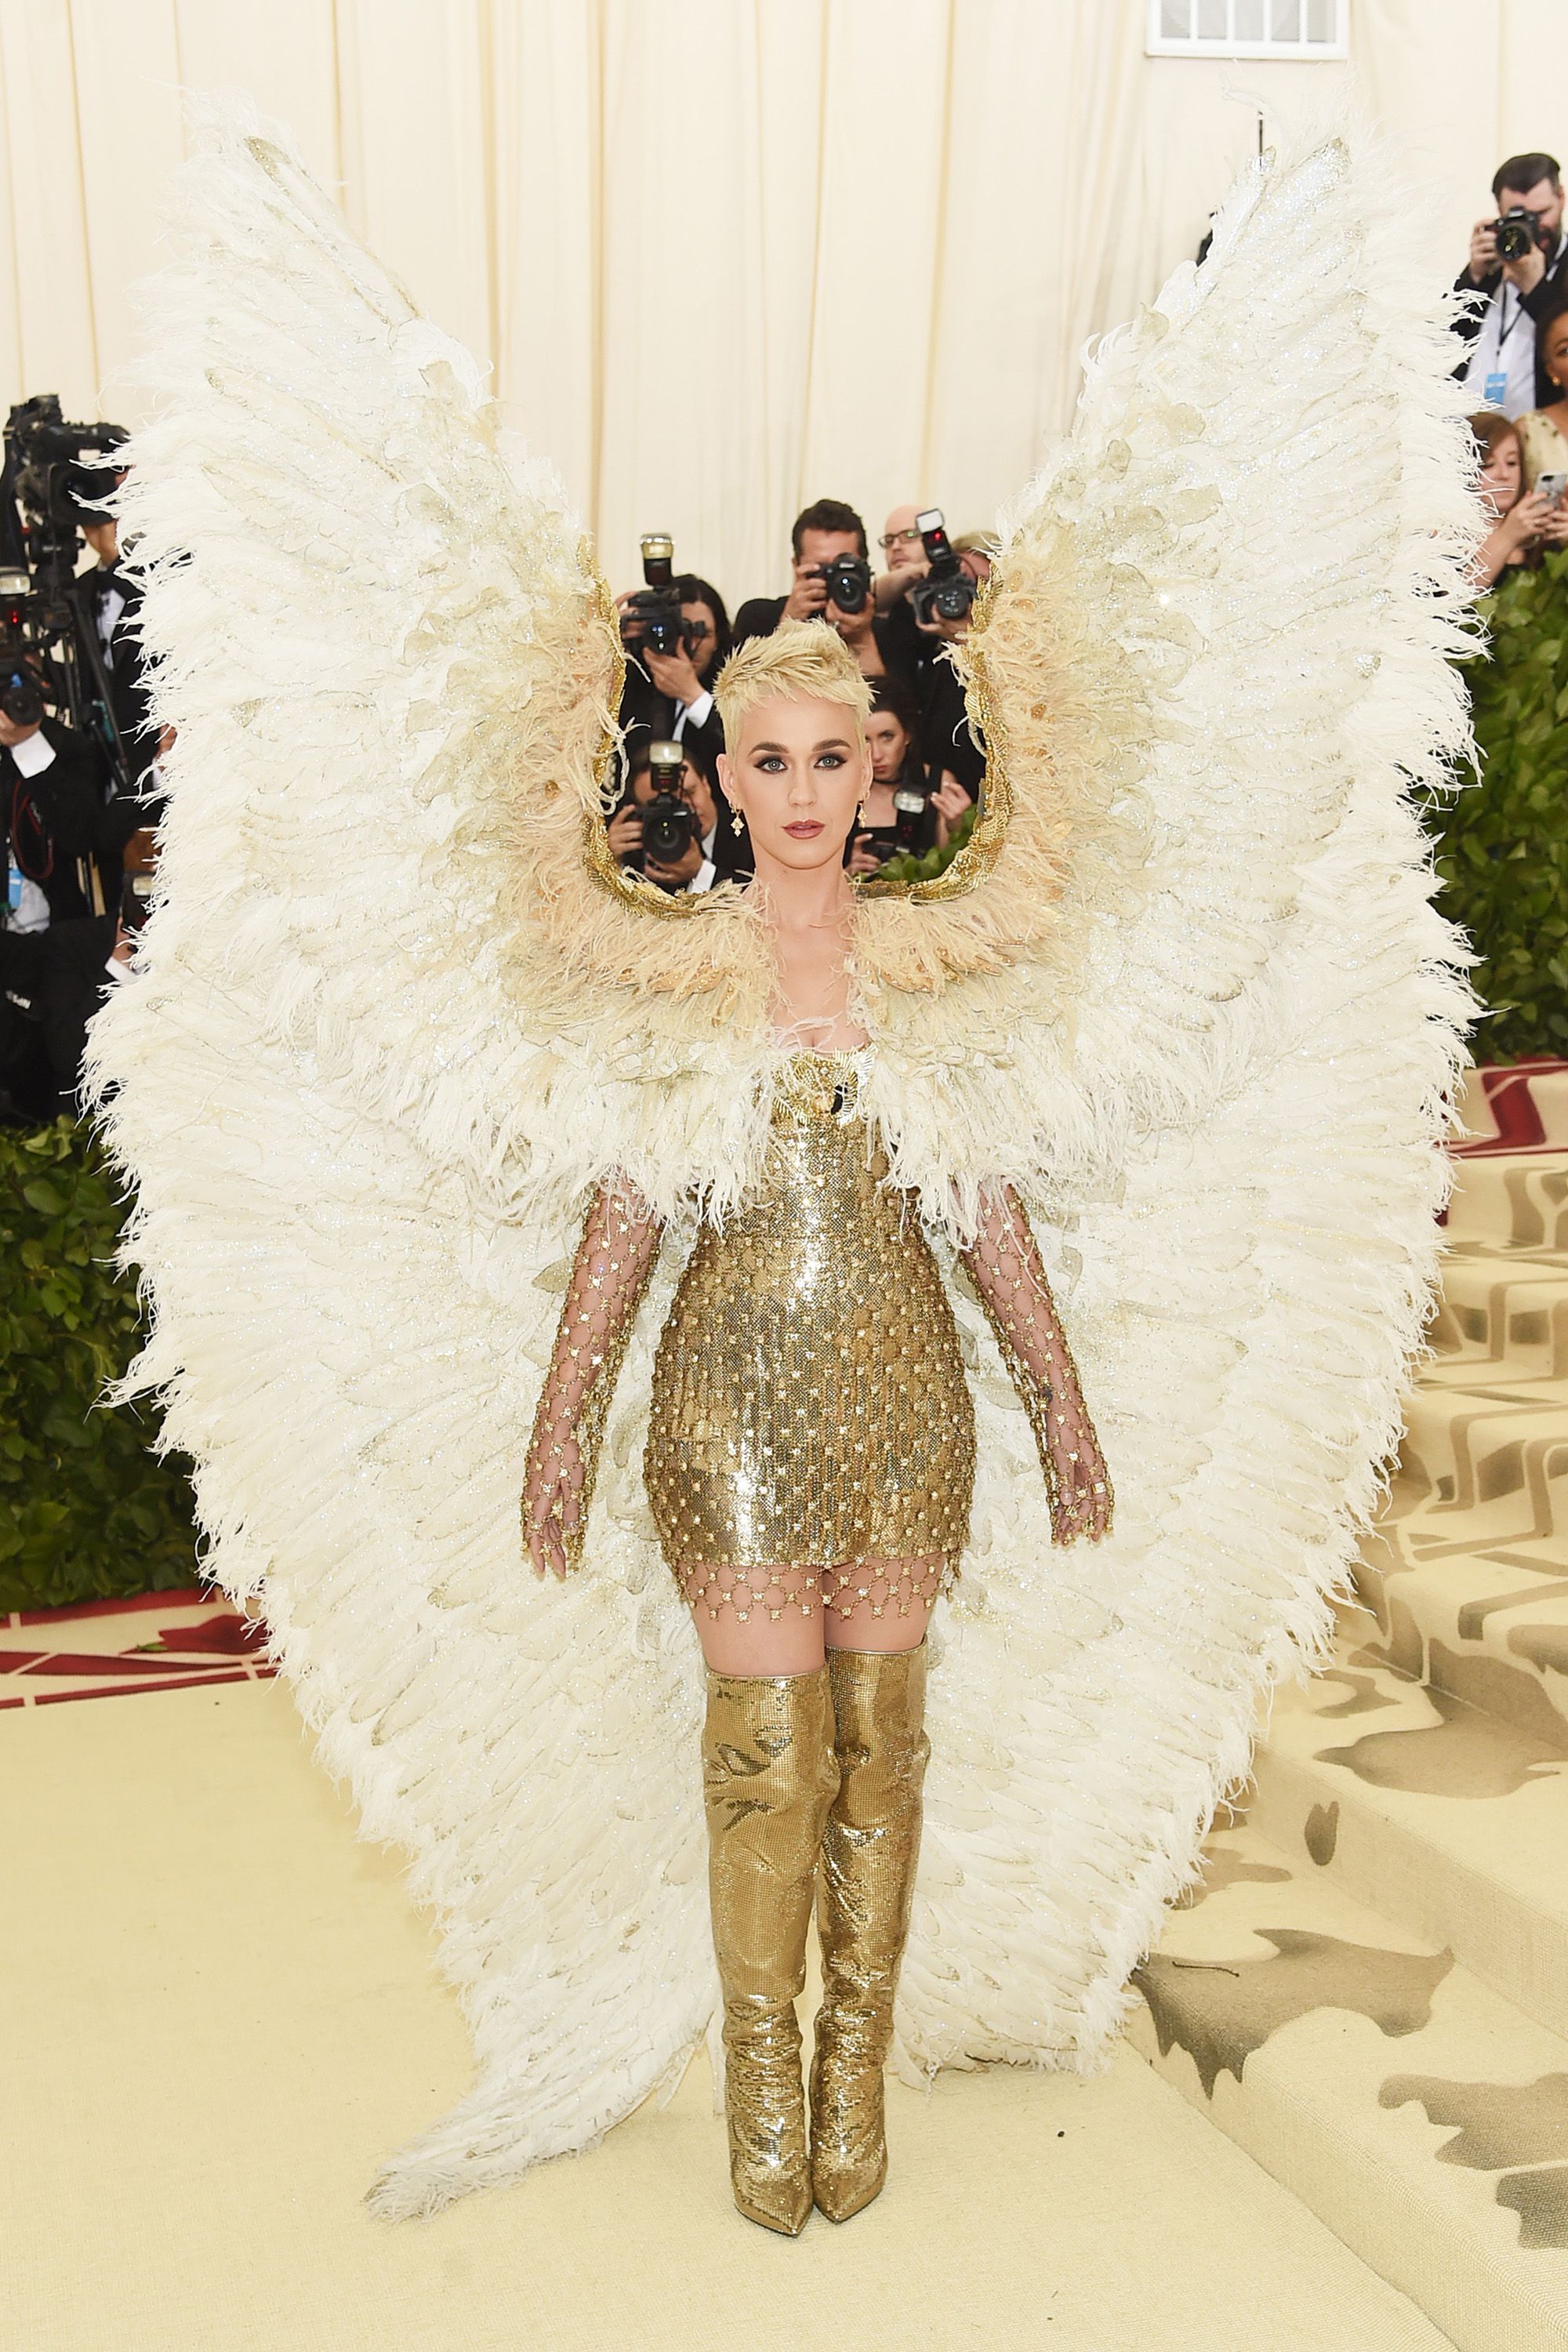 Katy Perry Wore Angel Wings to the Met Gala 2018 Red Carpet